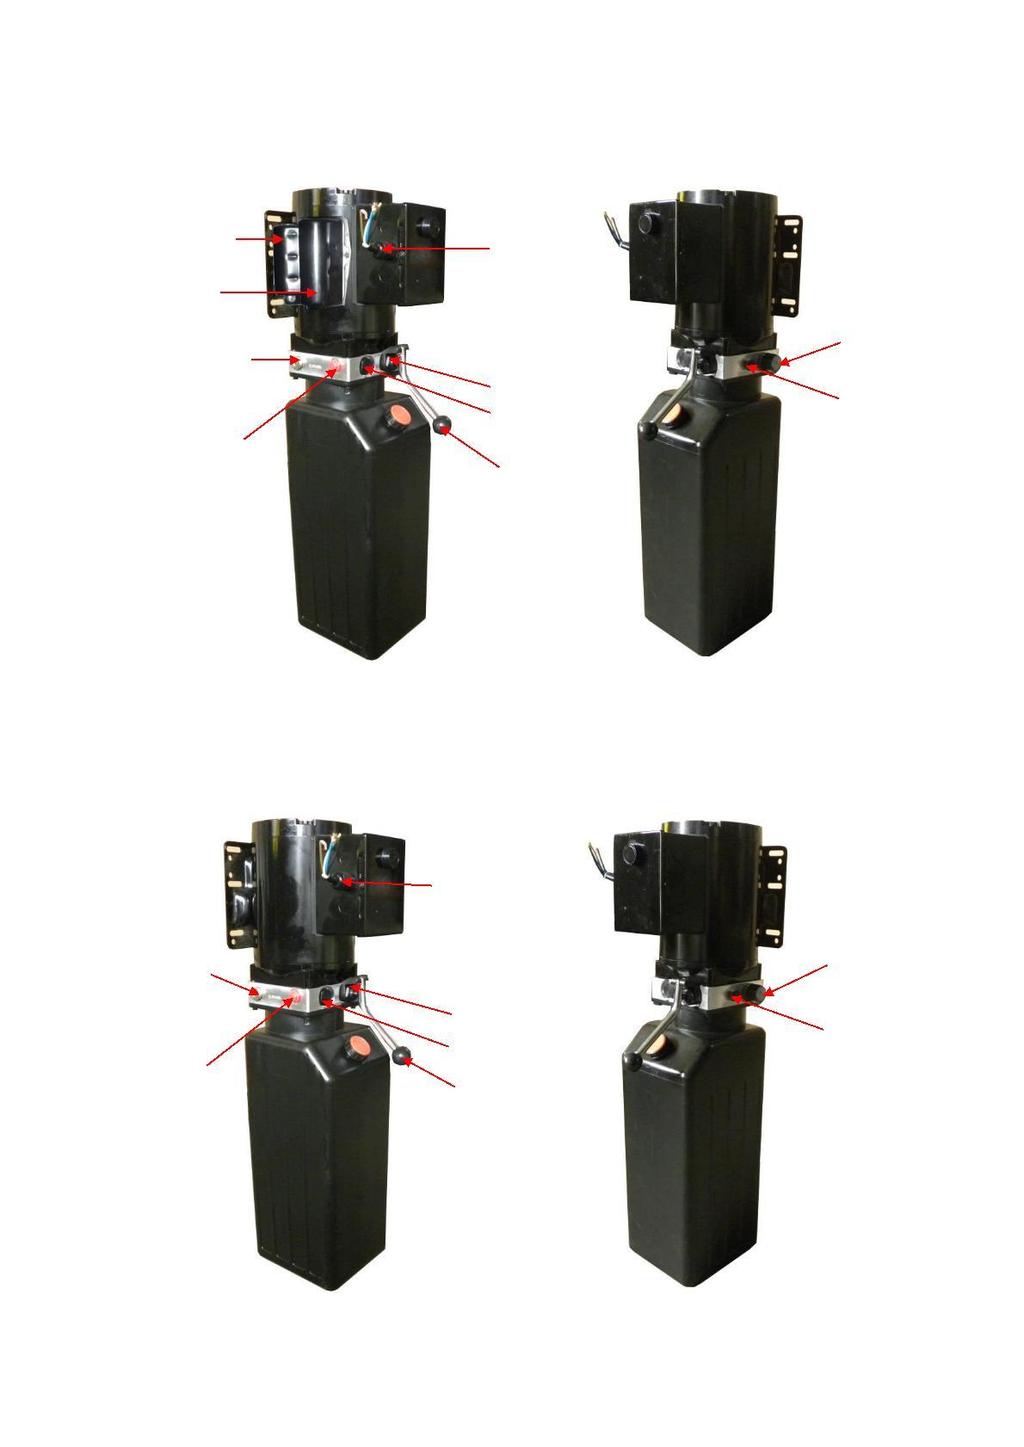 b. Indypro manual power unit, 220V/50HZ, Single phase (See Fig.